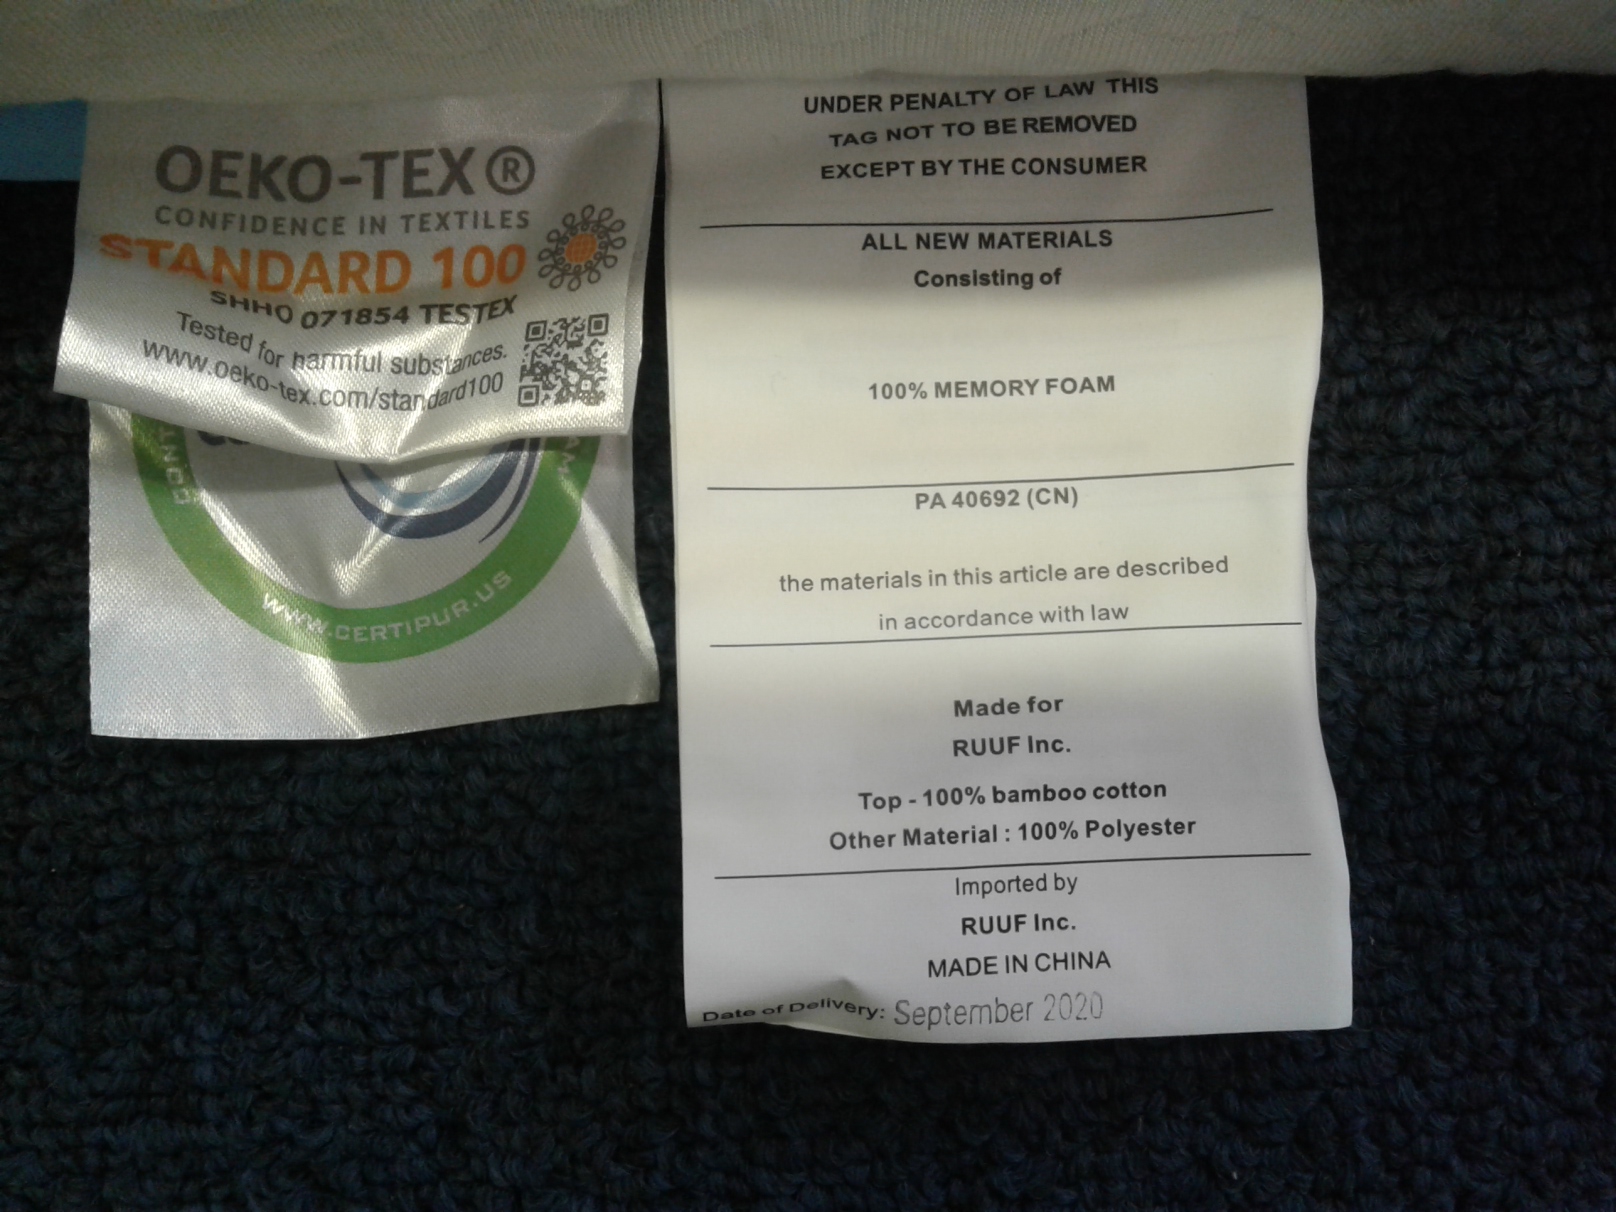 oeko-tex certified mattress pads